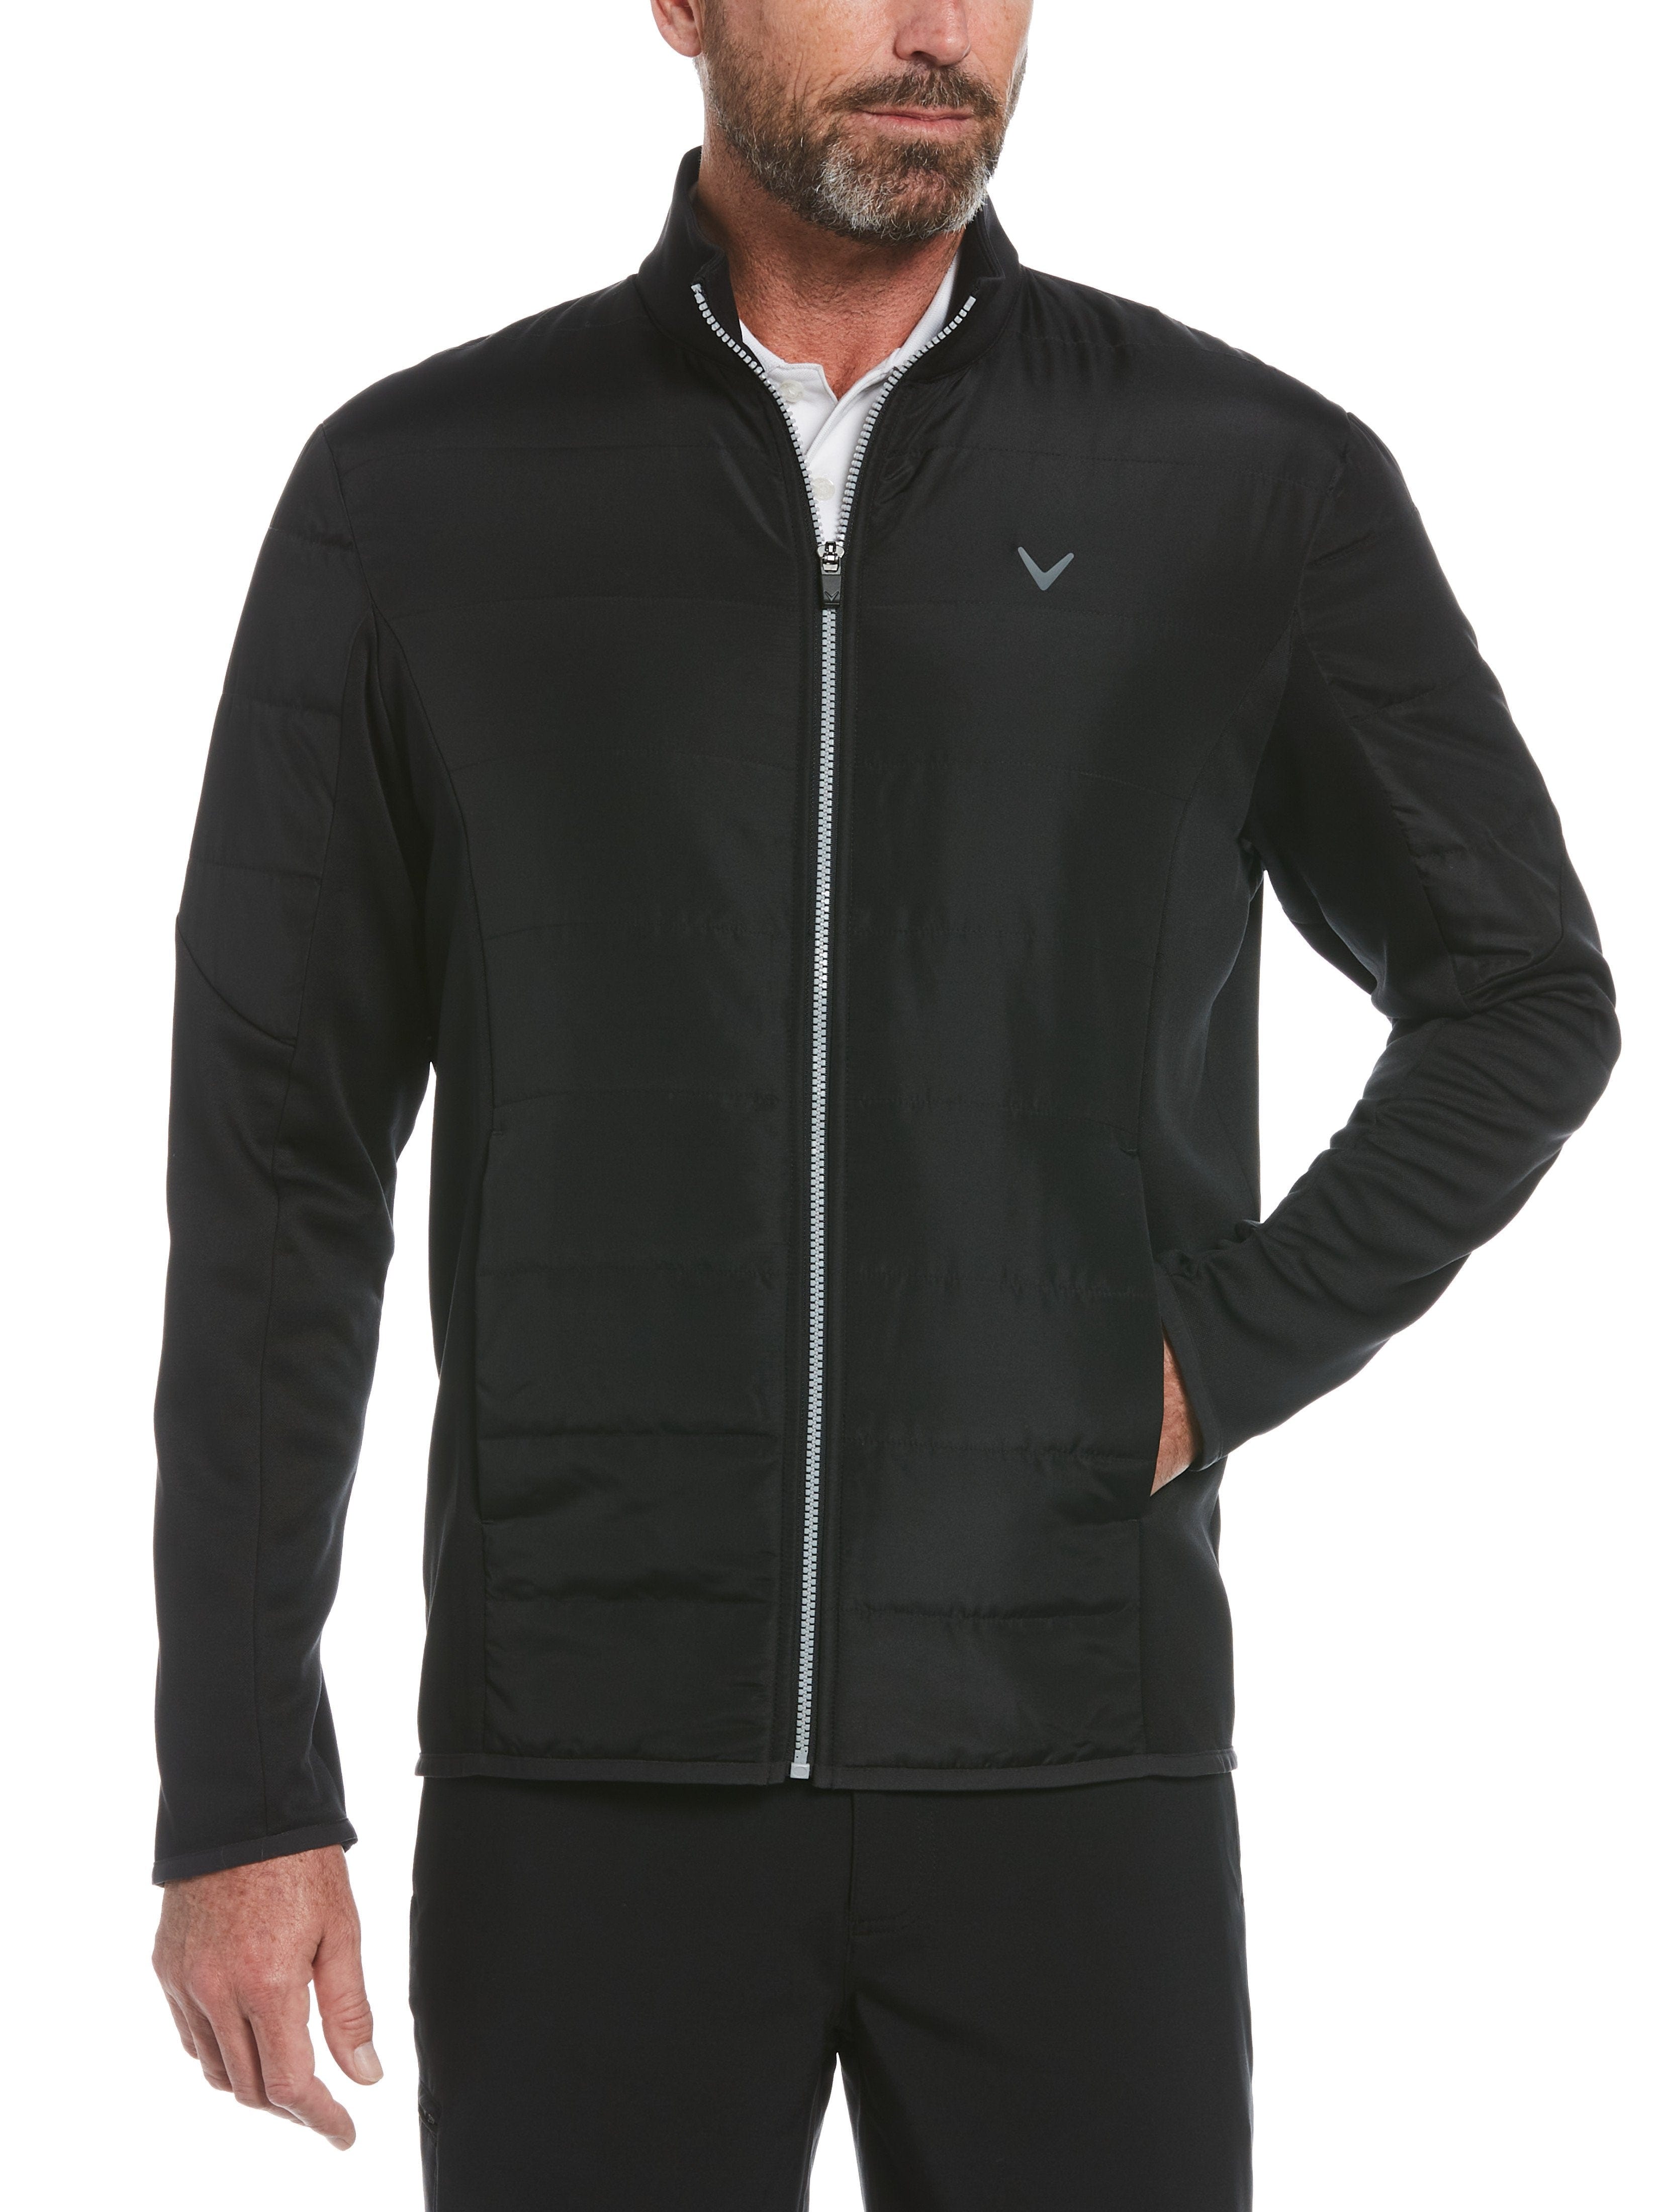 Callaway Apparel Mens Hybrid Performance Puffer Jacket Top, Size Large, Black, 100% Polyester | Golf Apparel Shop